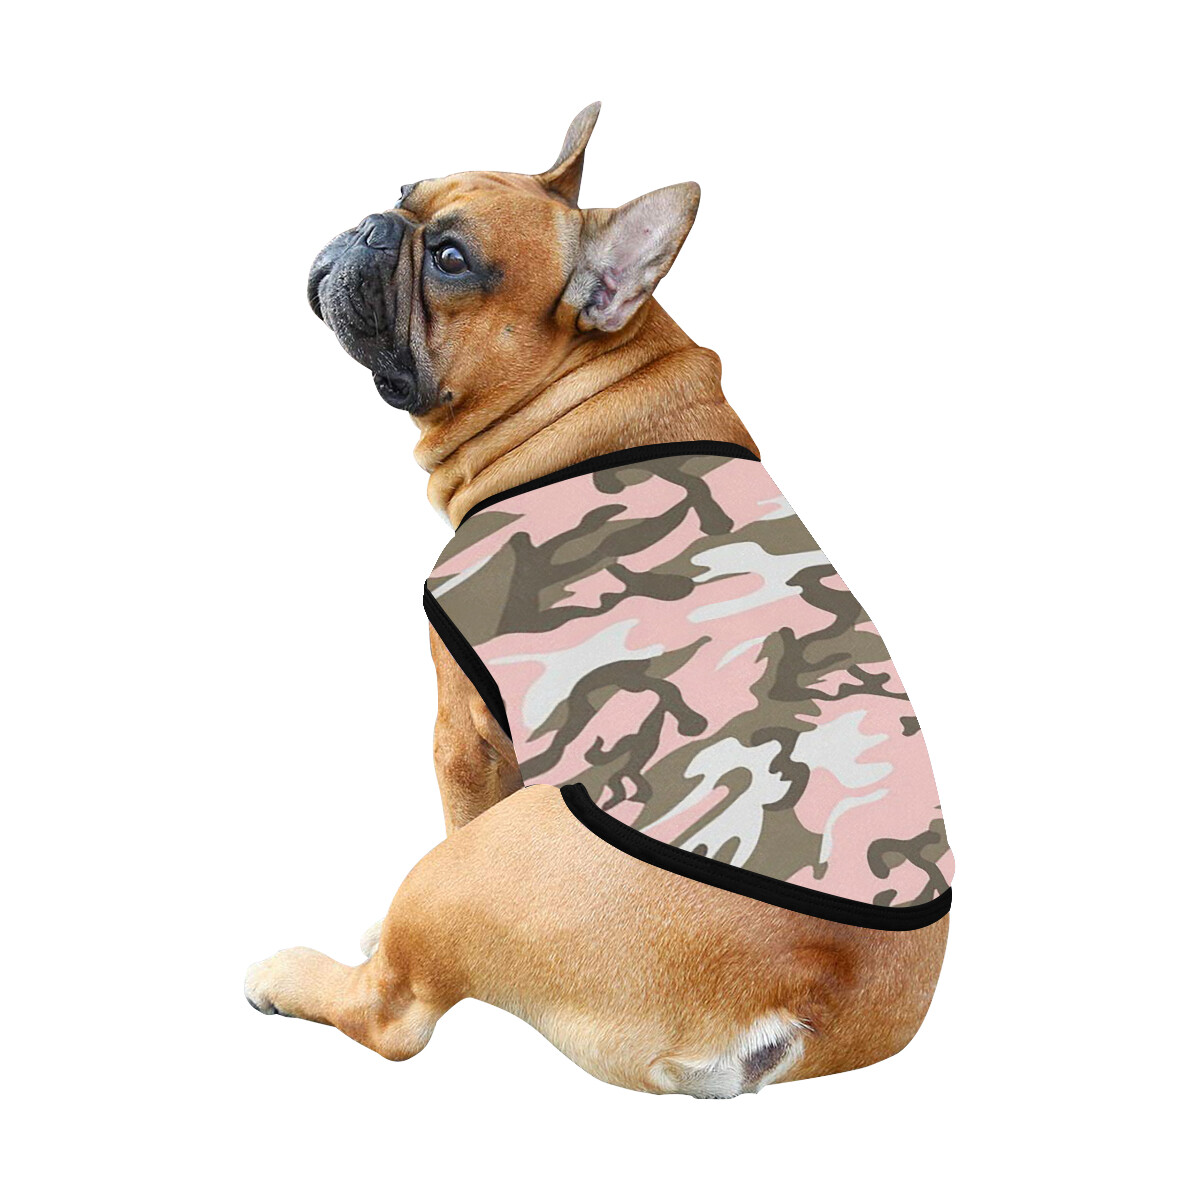 🐕 Camo Army Dog shirt Dog Tank Top, Dog shirt, Dog clothes, Gifts, front back print, 7 sizes XS to 3XL, dog t-shirt, dog gift pink white green